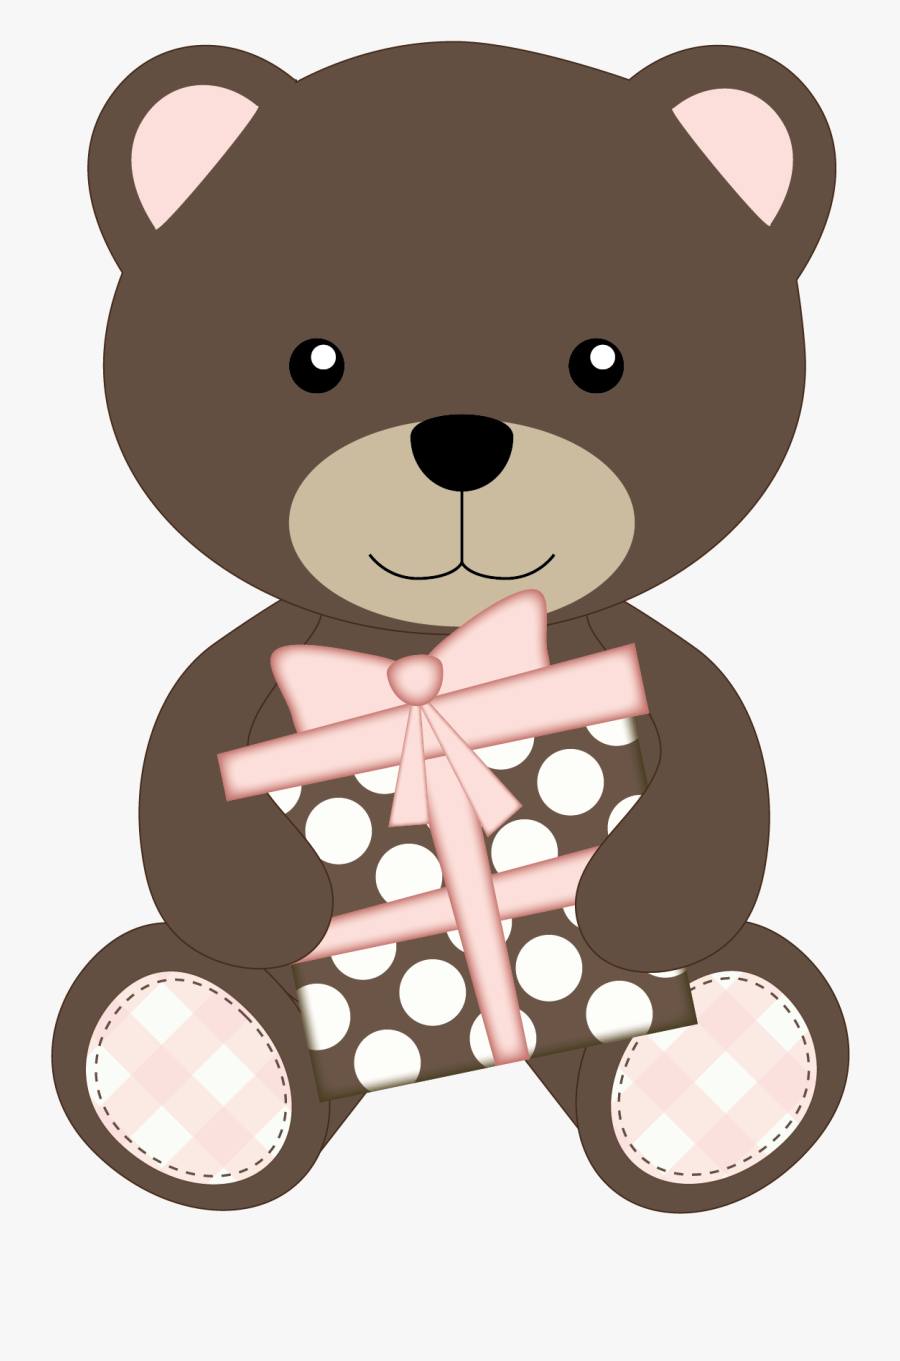 Http - //danimfalcao - Minus - Com/mygimocebbww - Cute - Baby Shower Teddy Bear Clip Art, Transparent Clipart